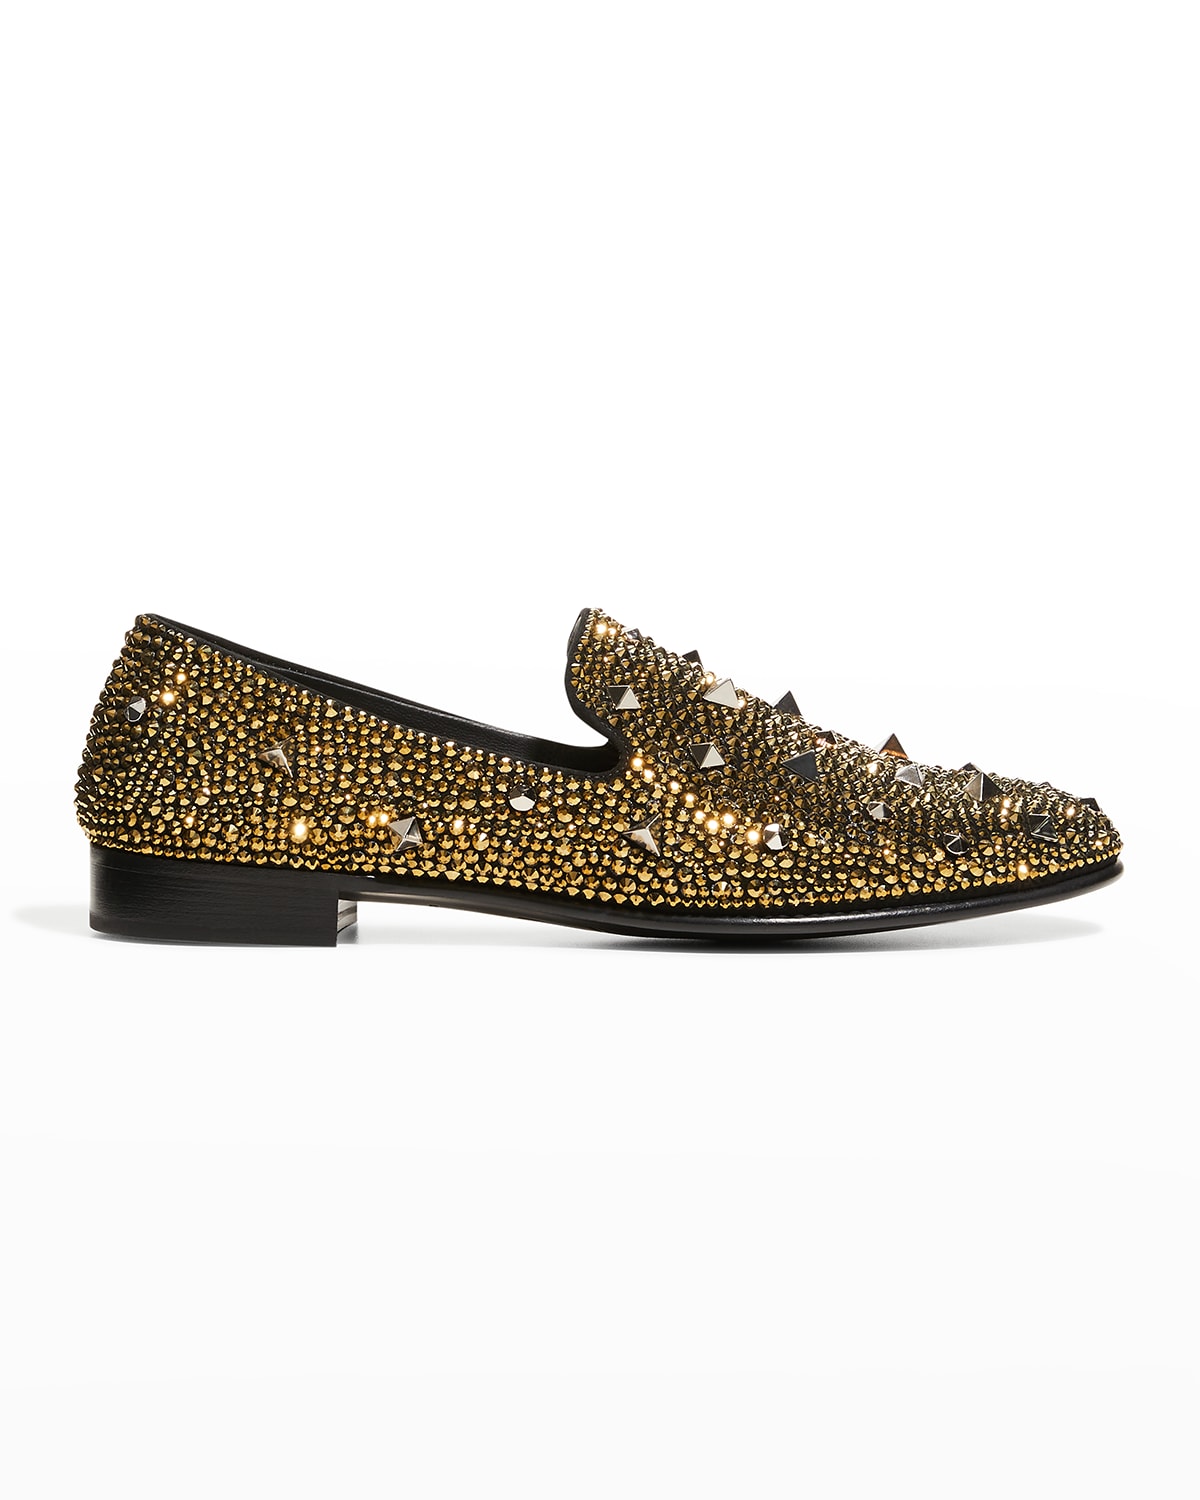 Swarovski Crystals Shoes | Neiman Marcus